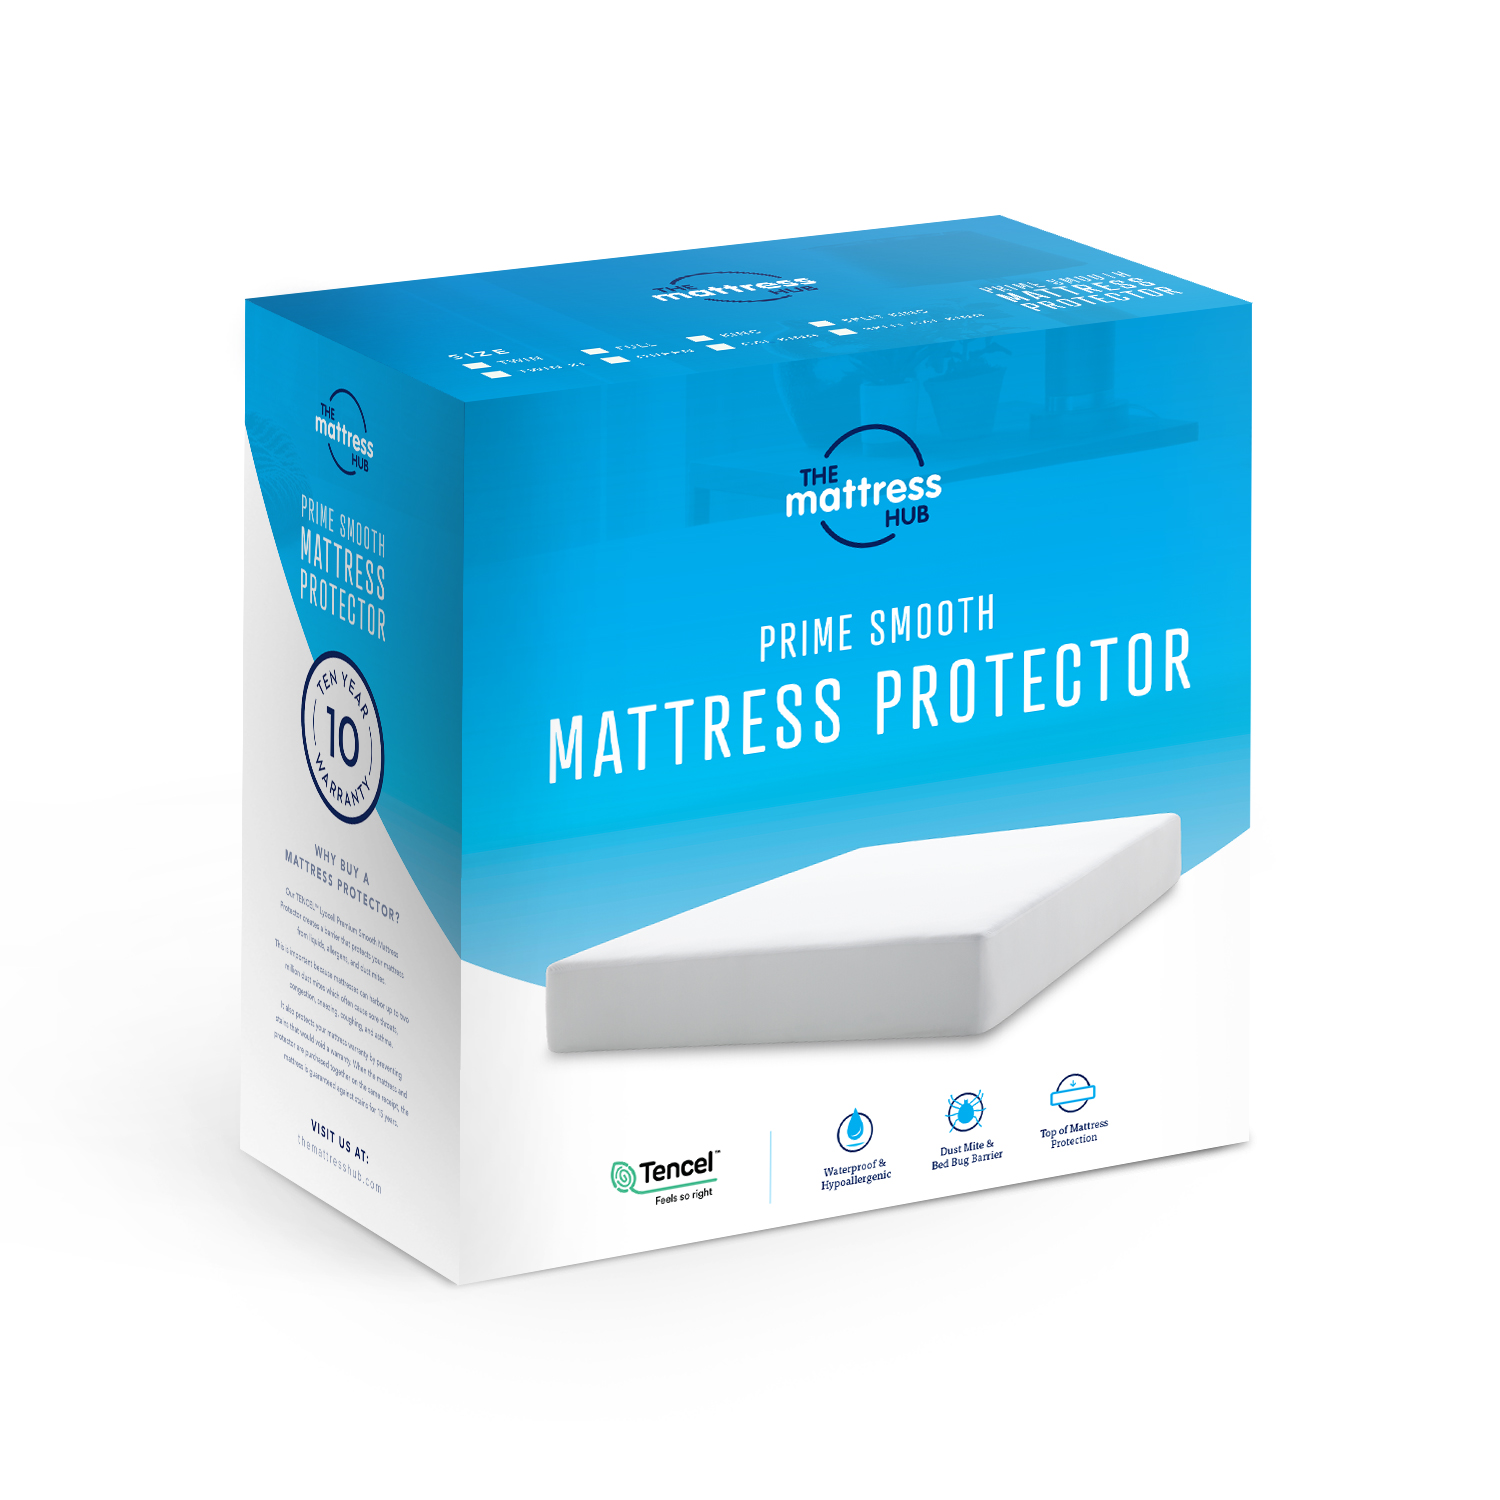 Prime™ Smooth Mattress Protector | The Mattress Hub